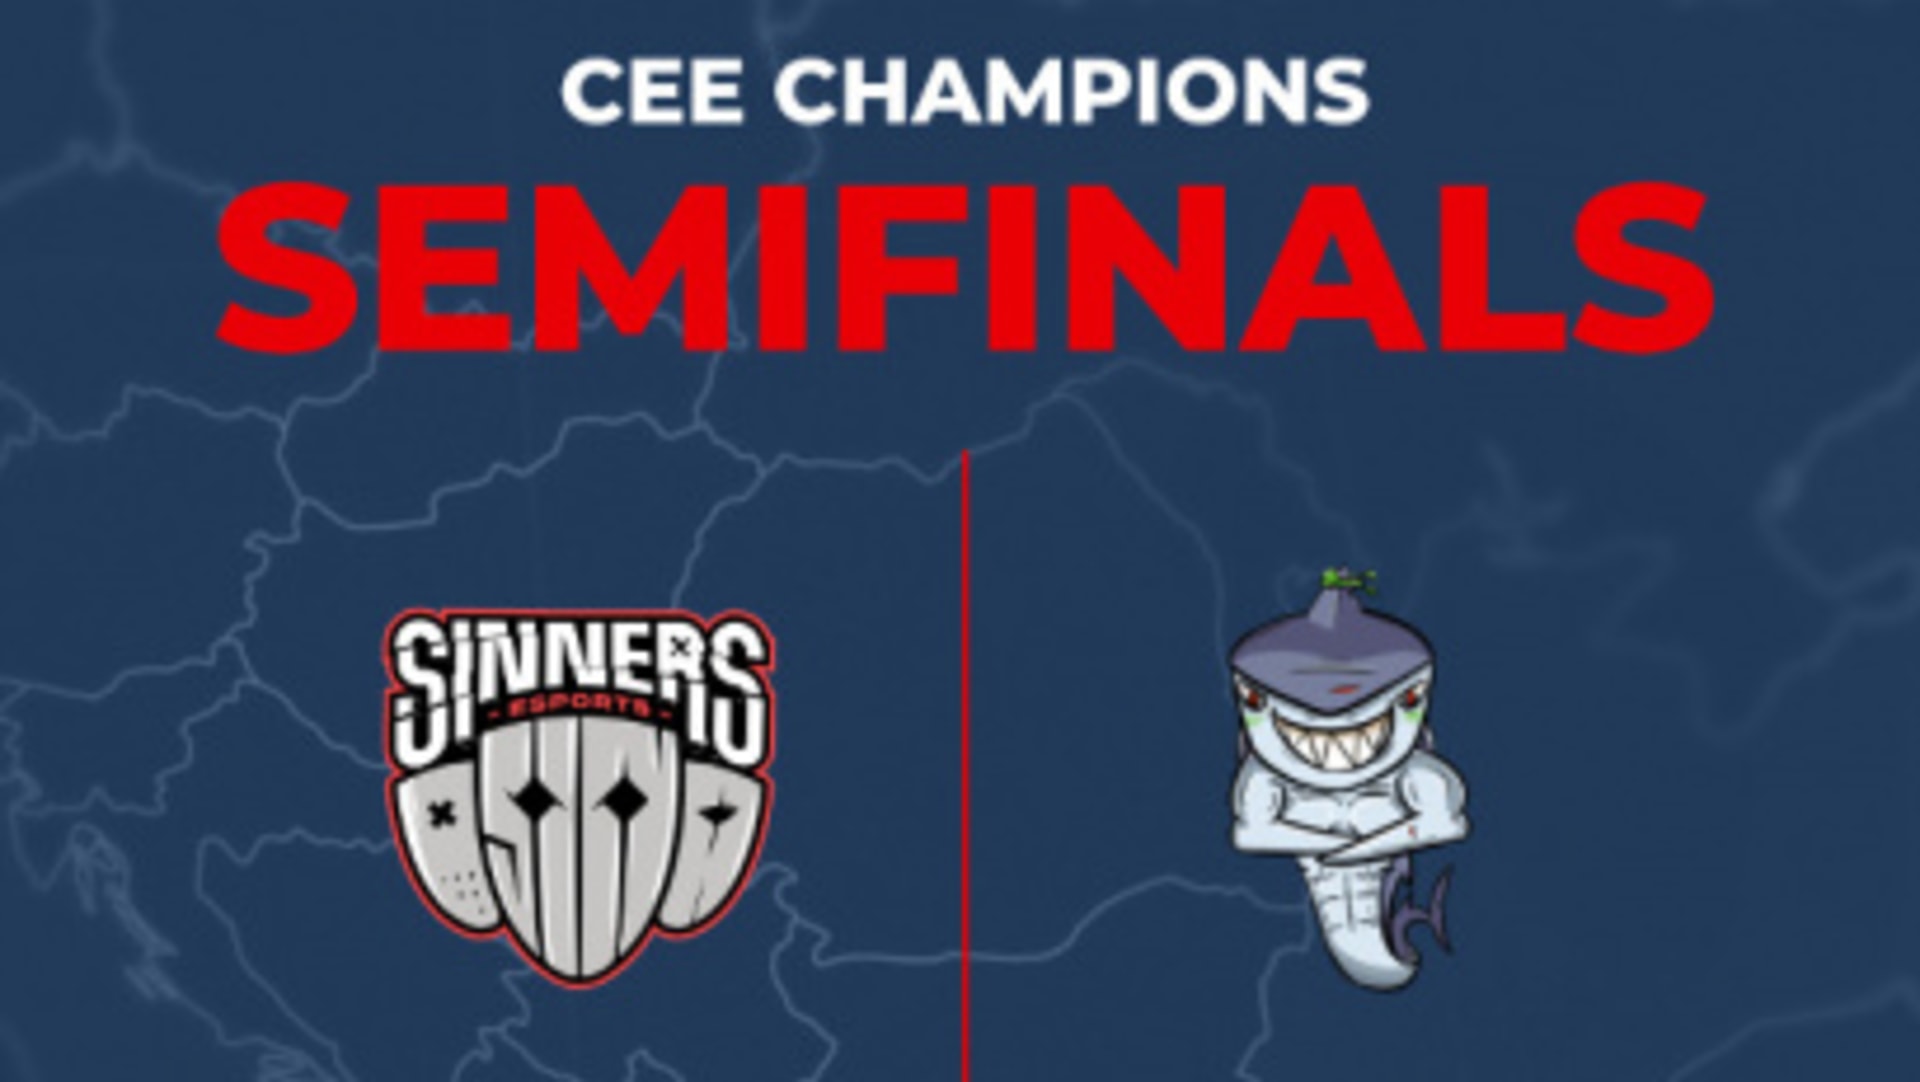 CEE Champions